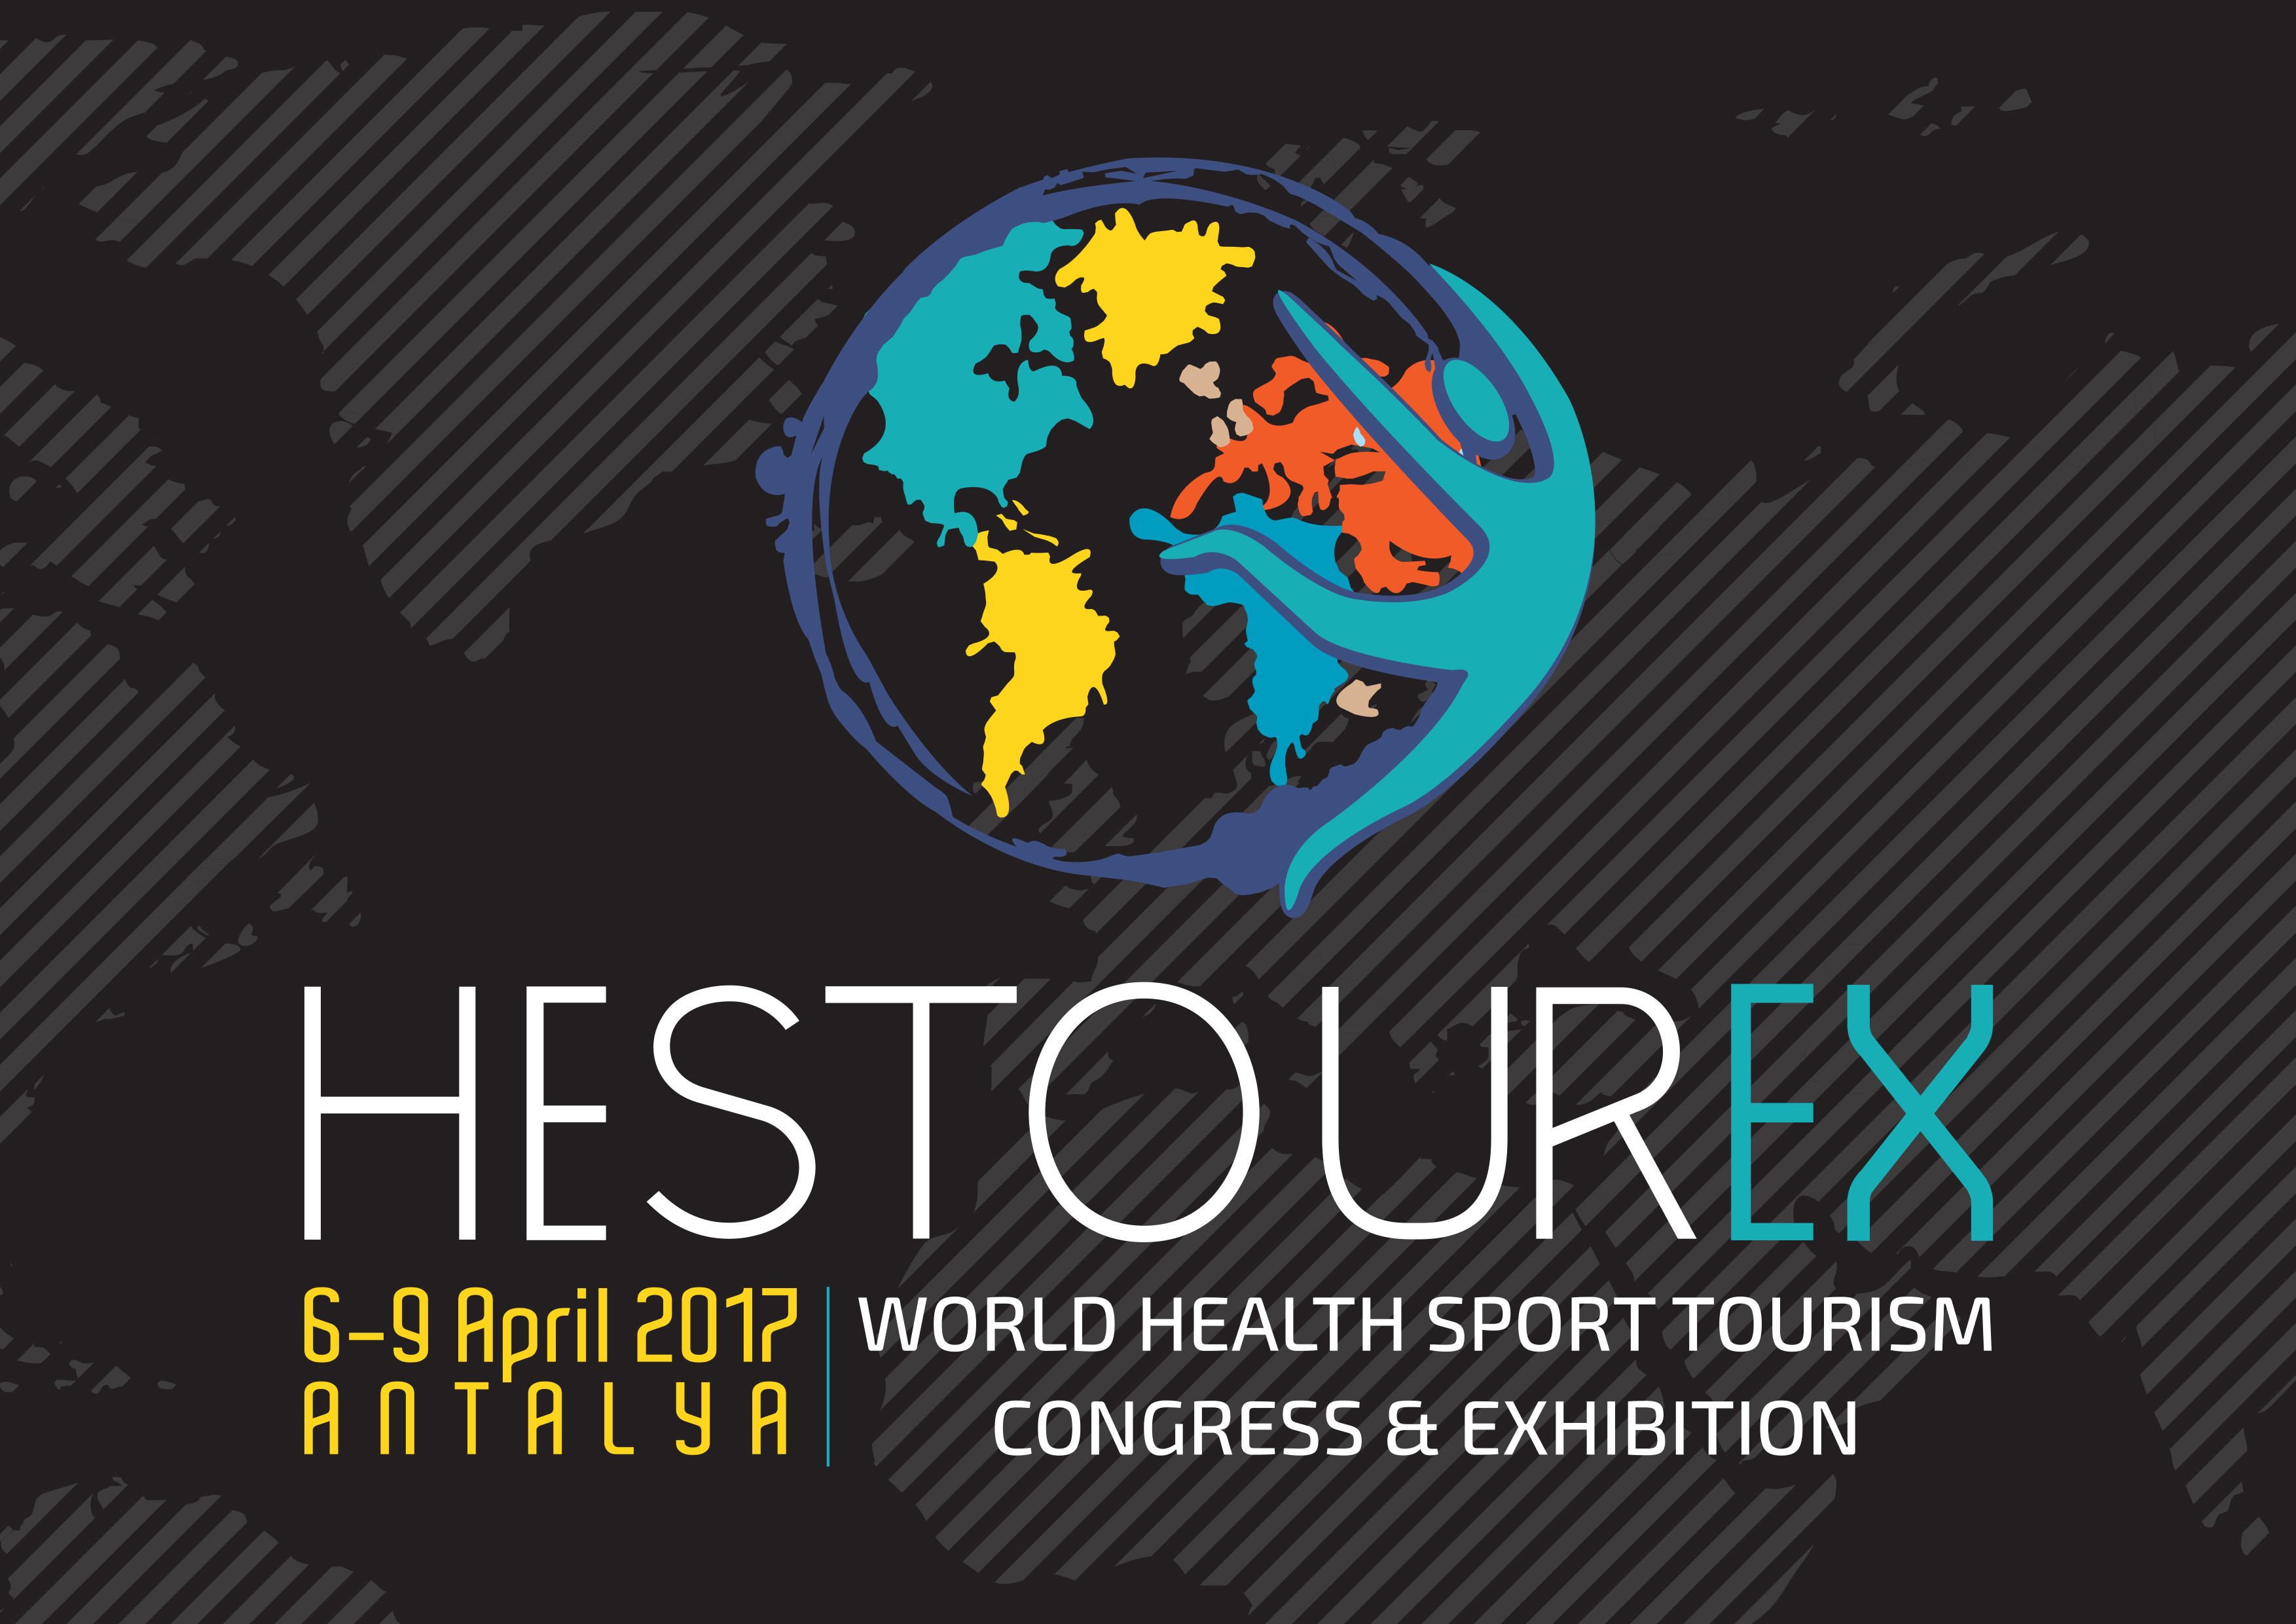 HESTOUREX WORLD HEALTH SPORTS TOURISM CONGRESS & EXHIBITON